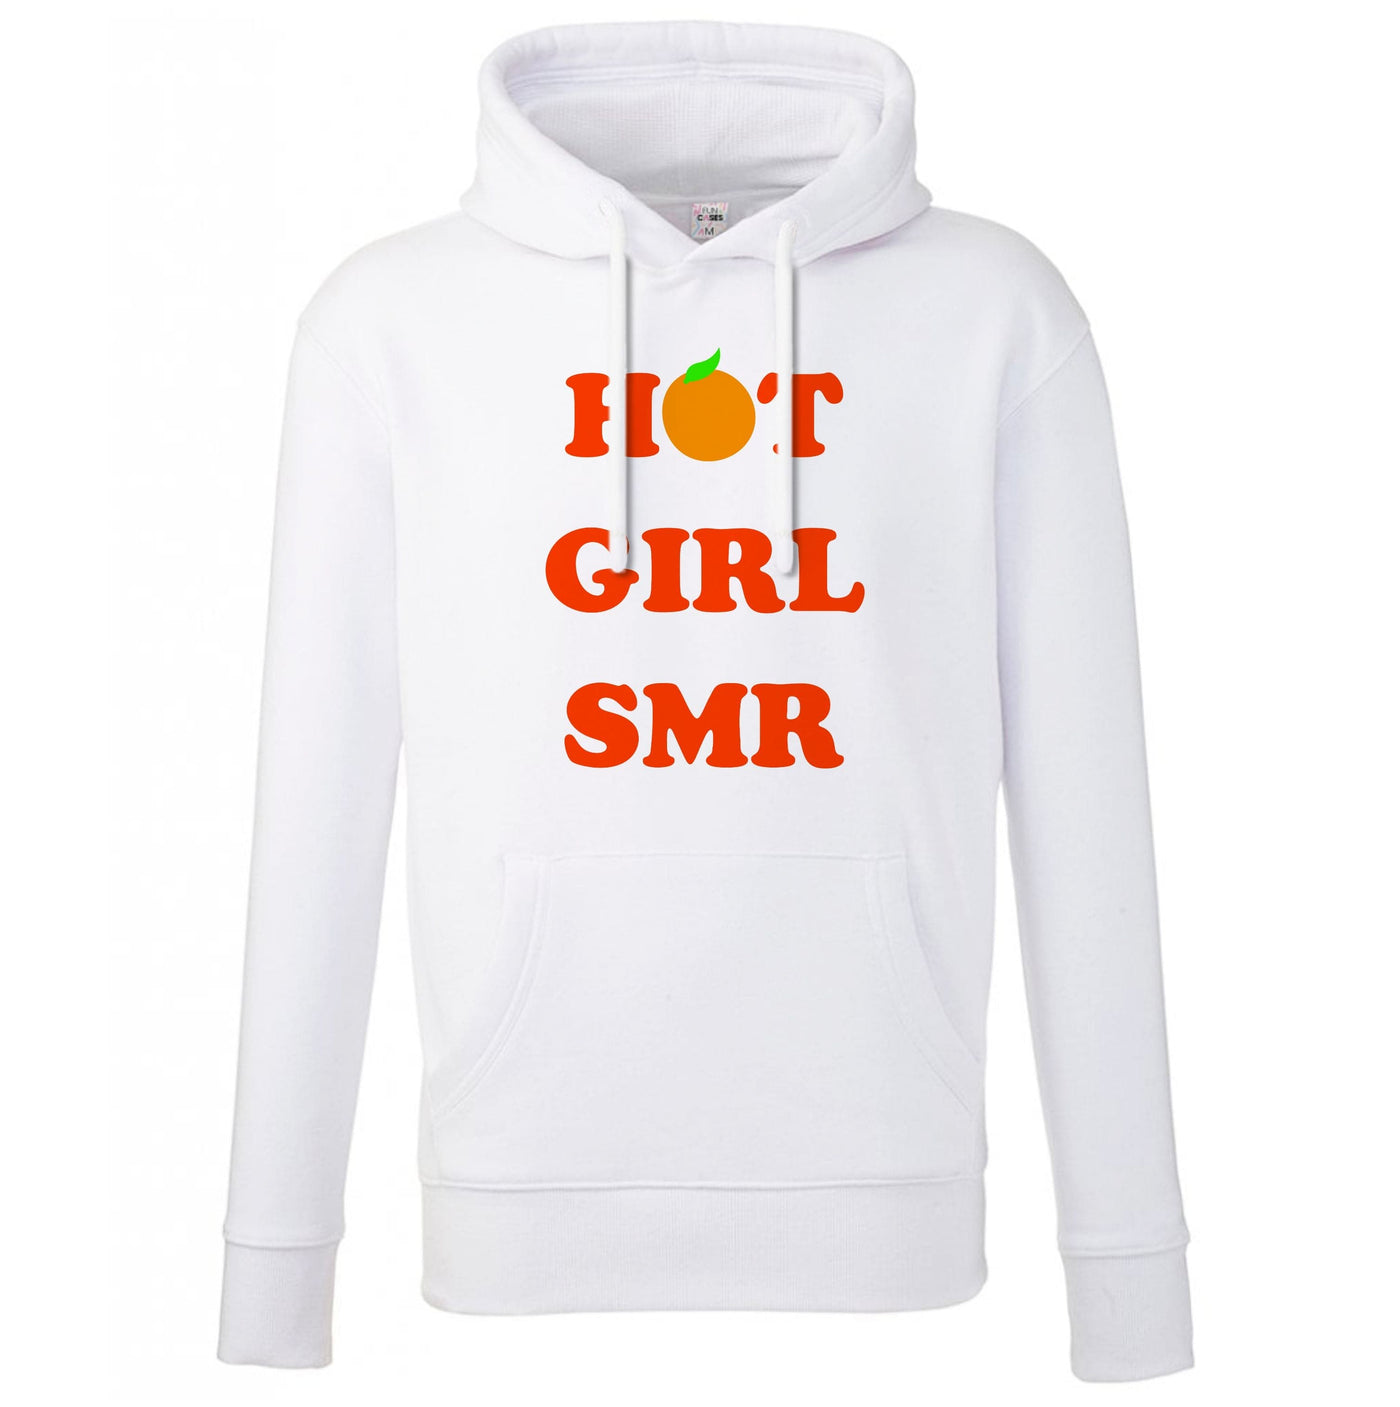 Hot Girl SMR - Summer Hoodie